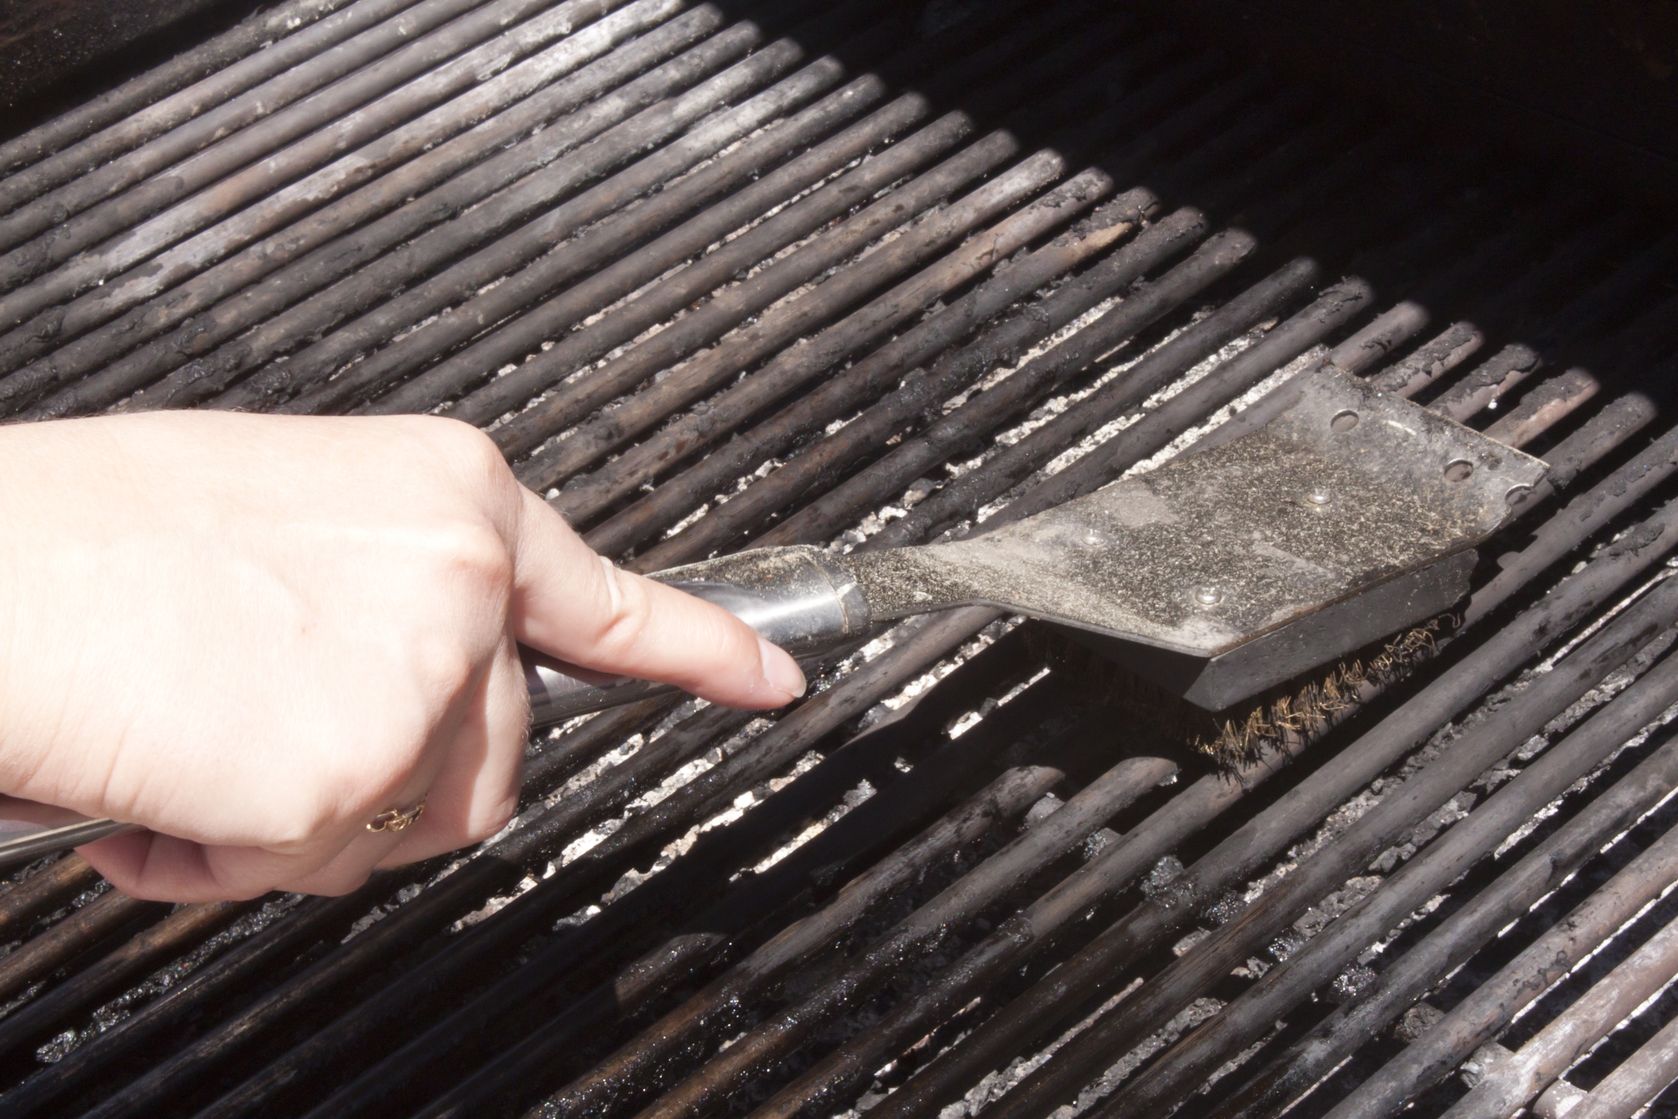 Person scrubbing BBQ grill grates with a brush.